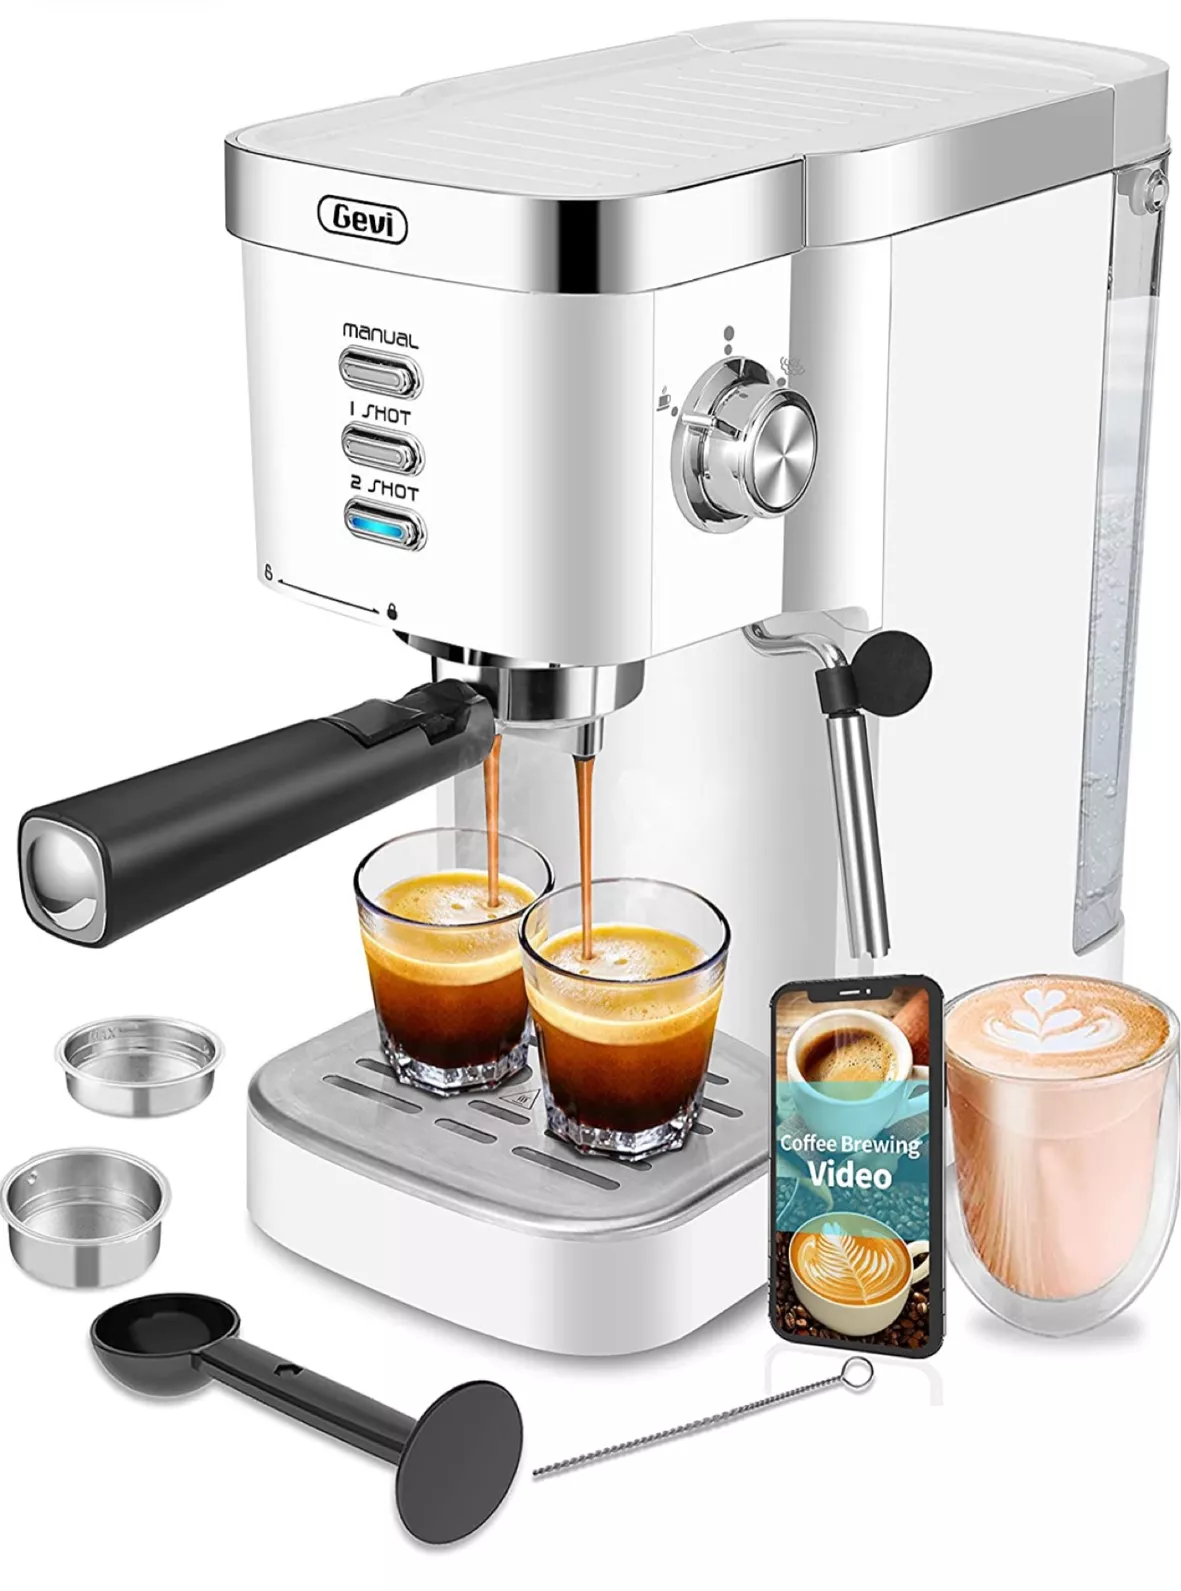 20 Bar Espresso Machine, Fast Heating Coffee Machine With Milk